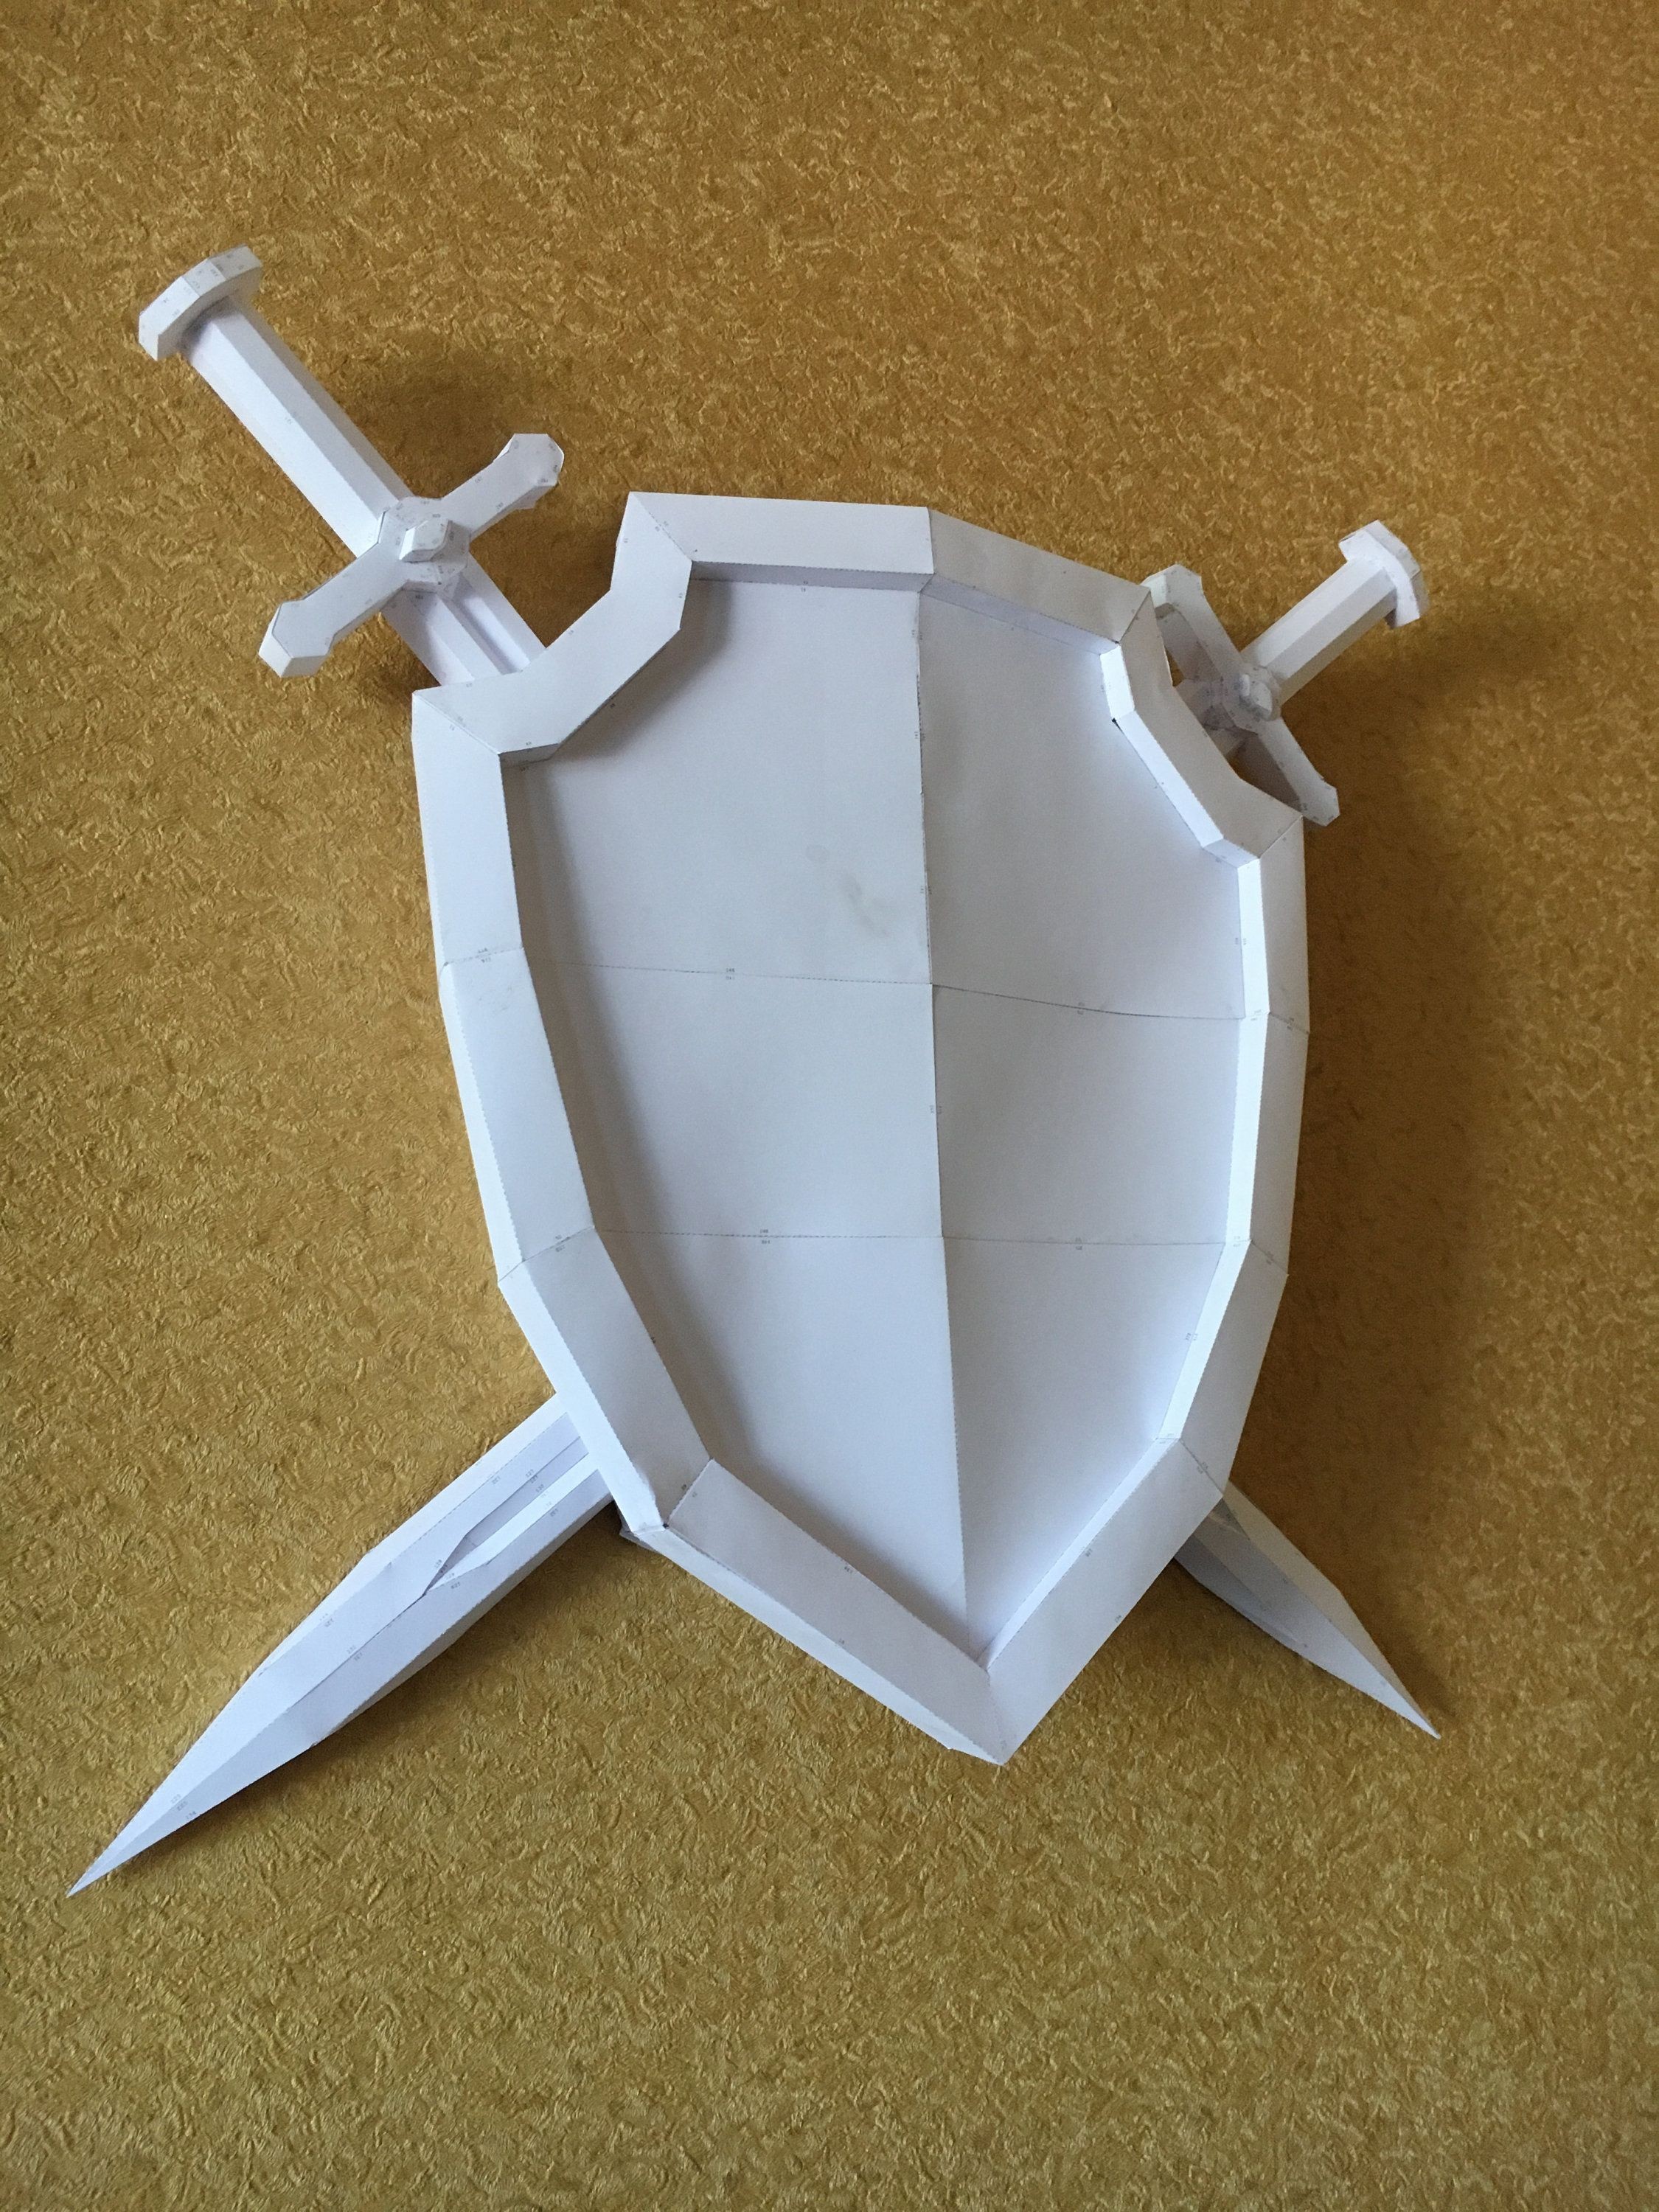 Papercraft Costume Sword Shield Diy Papercraft Model ÐÑÐ¼Ð°Ð¶Ð½ÑÐµ Ð¸Ð·Ð´ÐµÐ Ð¸Ñ